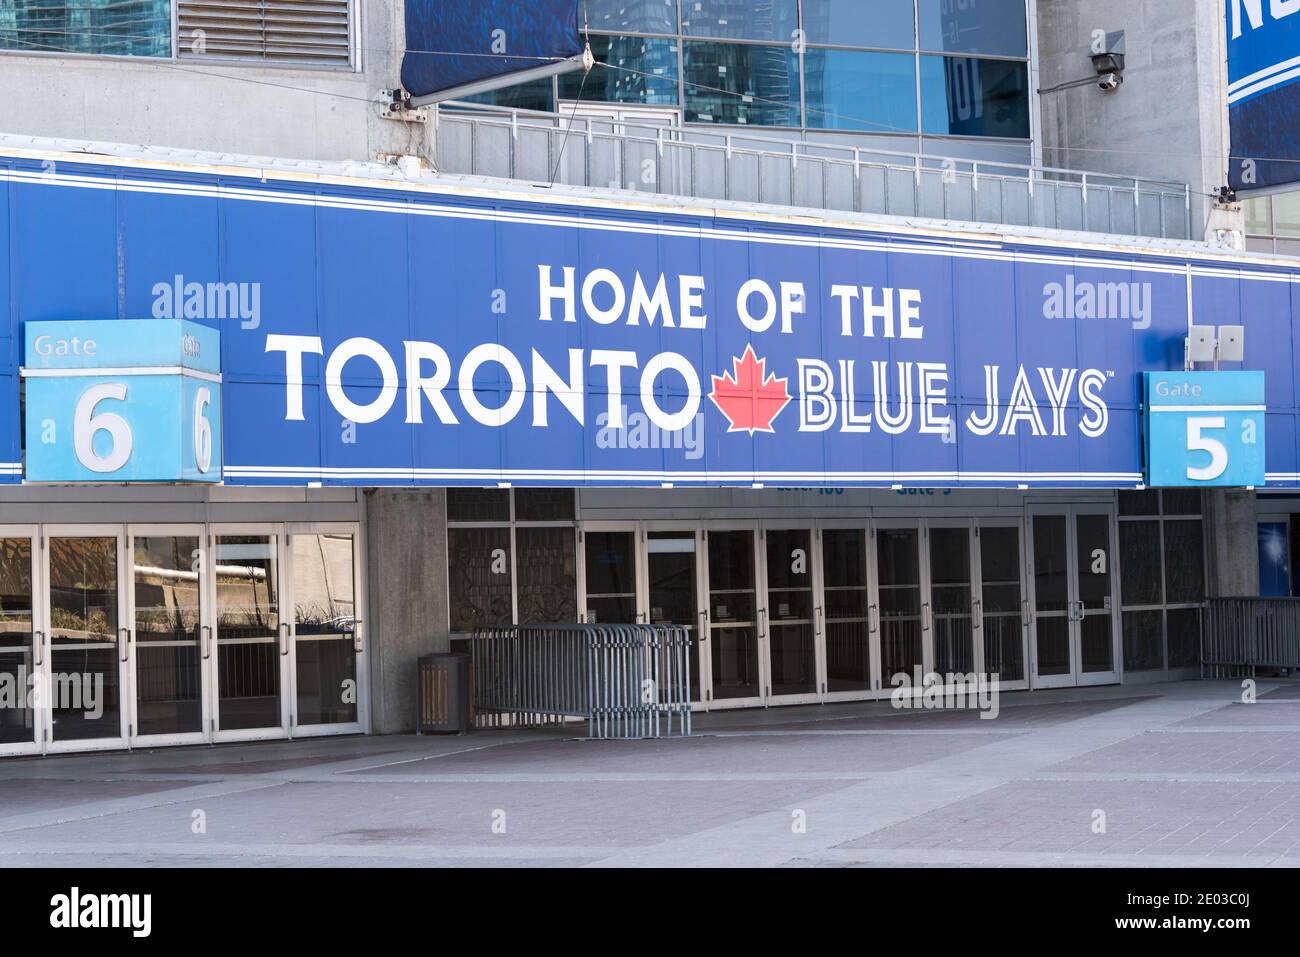 Rogers Centre Center entrance. Blue Jays baseball team sign at the